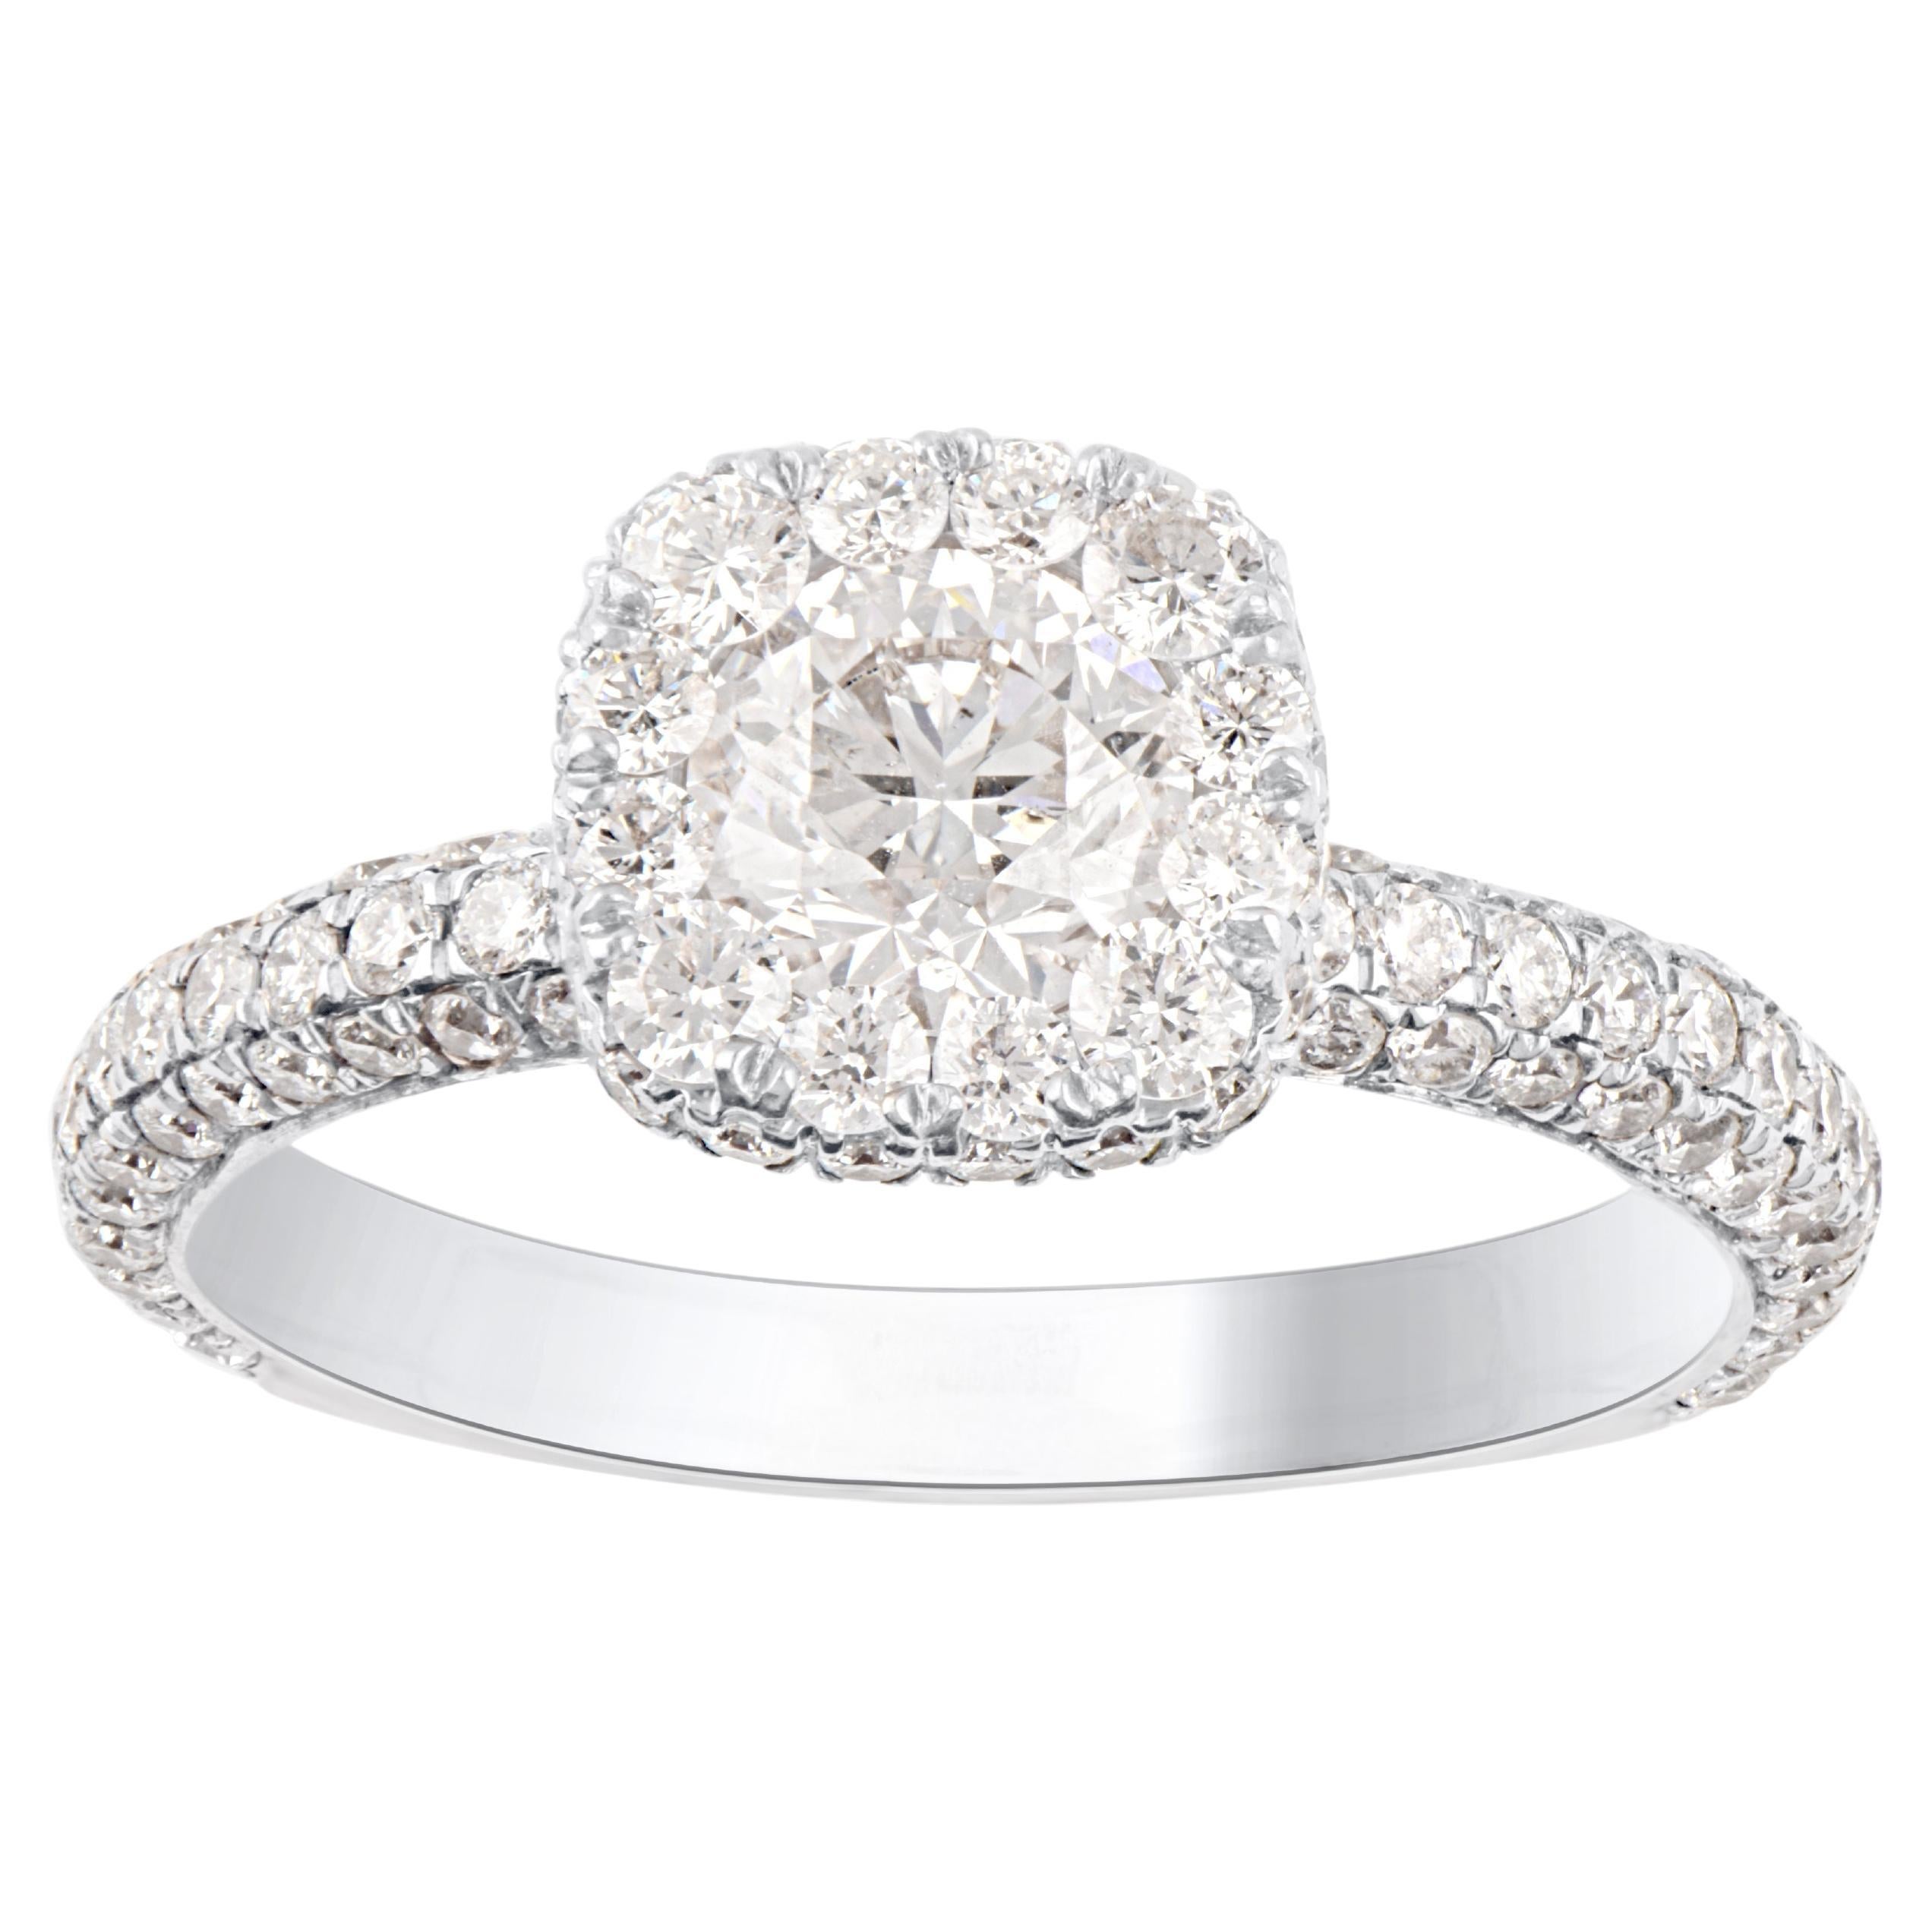 TJD 1.0 Carat Natural Round Diamond 14KT White Gold Halo Wedding Ring